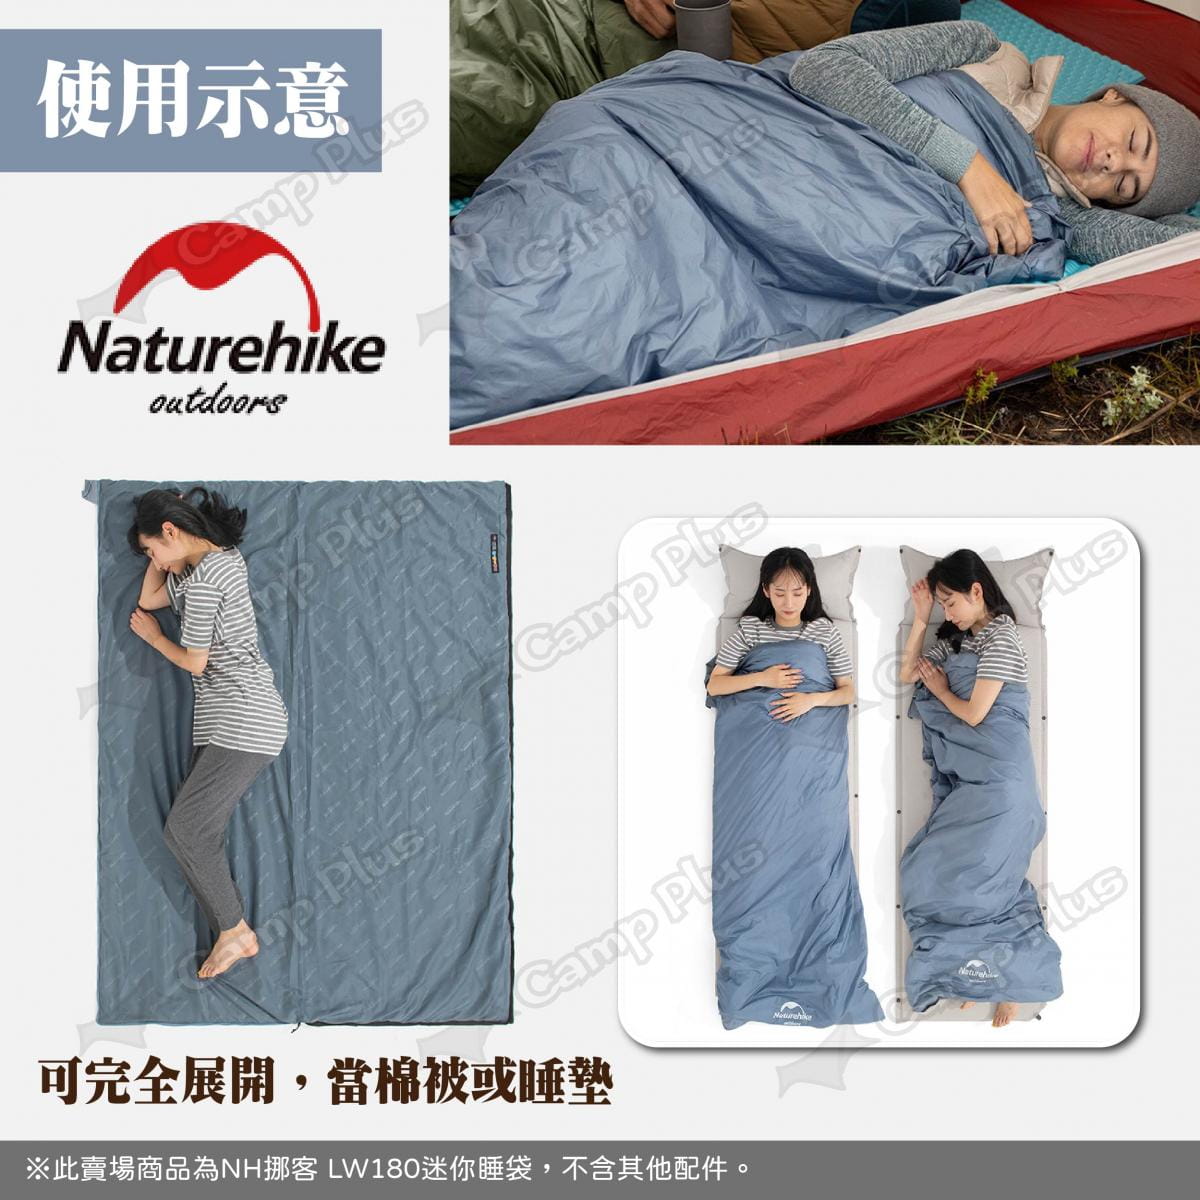 【NatureHike】【Naturehike 挪客】LW180迷你睡袋 標準款 悠遊戶外 5